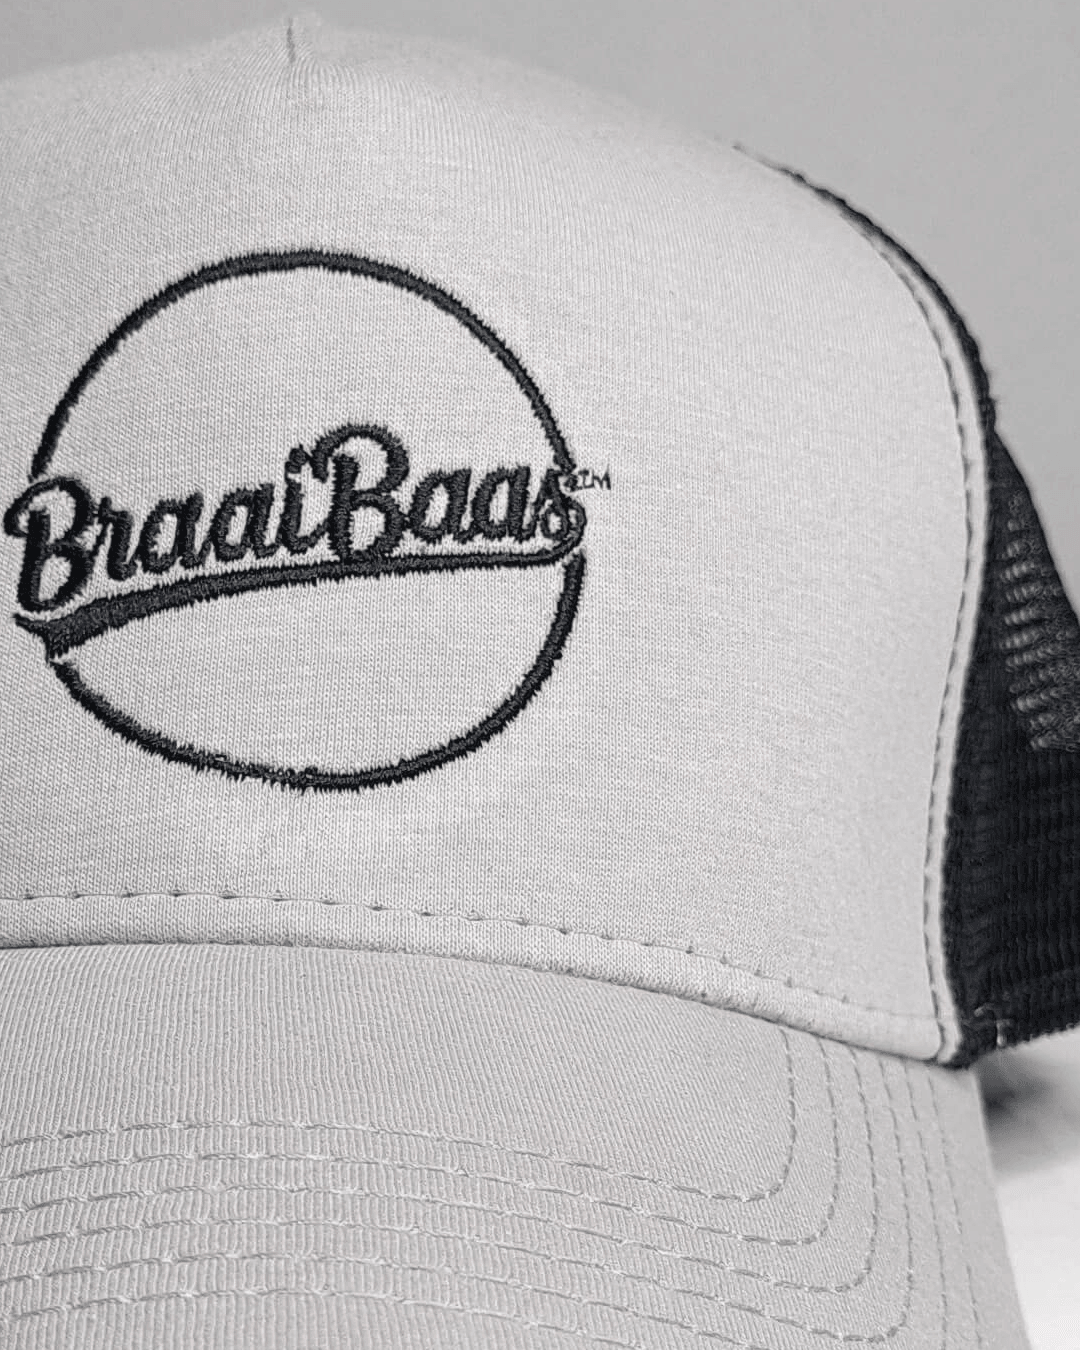 the best braai cap for ladies and womens, the best BBQ hat for womens and ladies, BBQ hat, braai hat, BBQ cap, braai cap